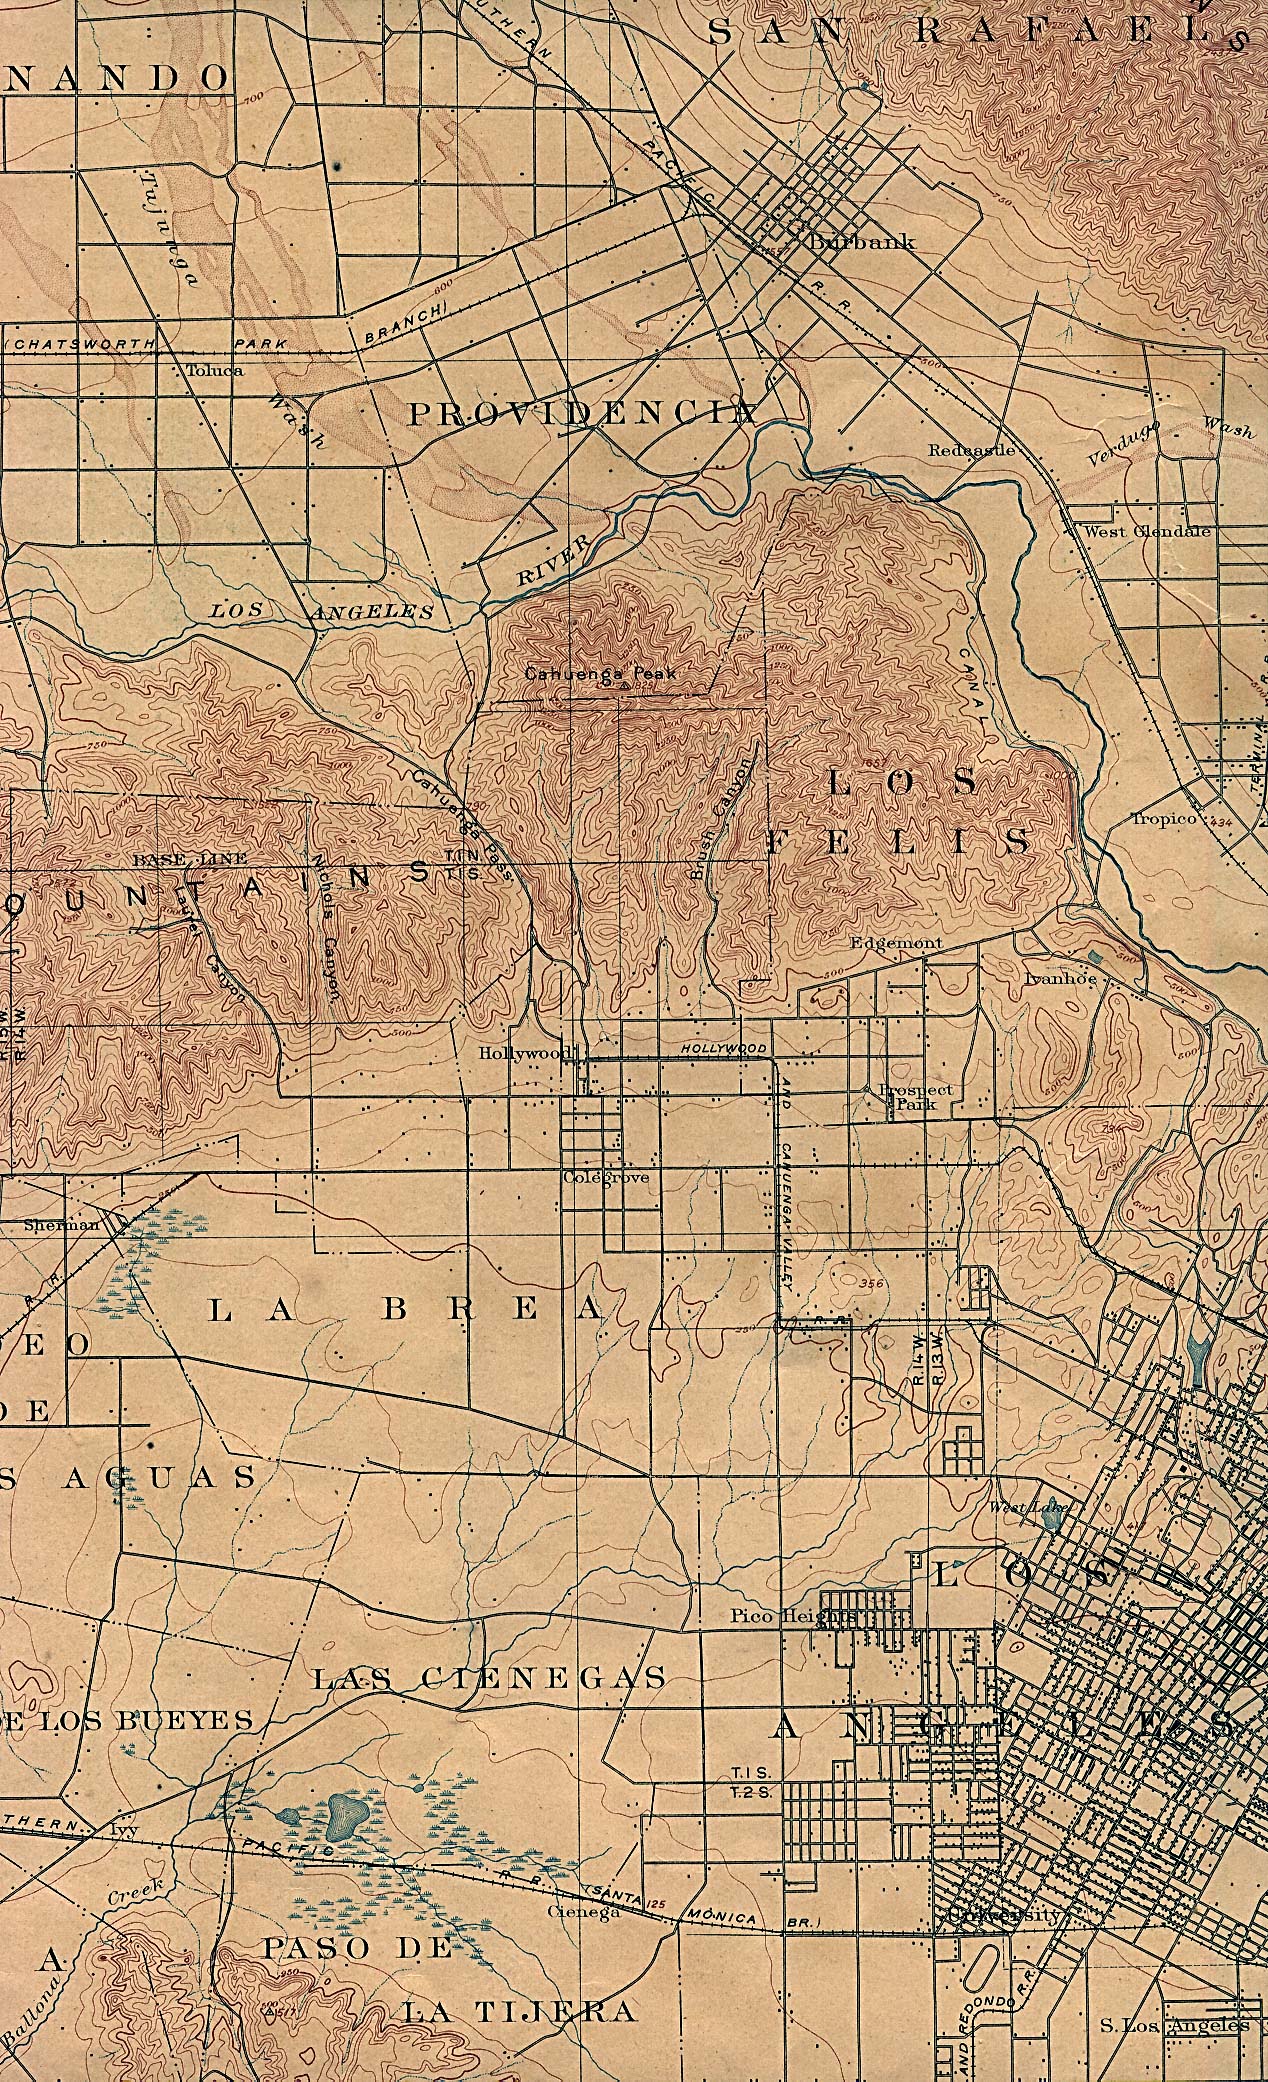 Historical Maps of U.S Cities. Los Angeles (West), California 1902 U.S. Geological Survey (1,097K) 